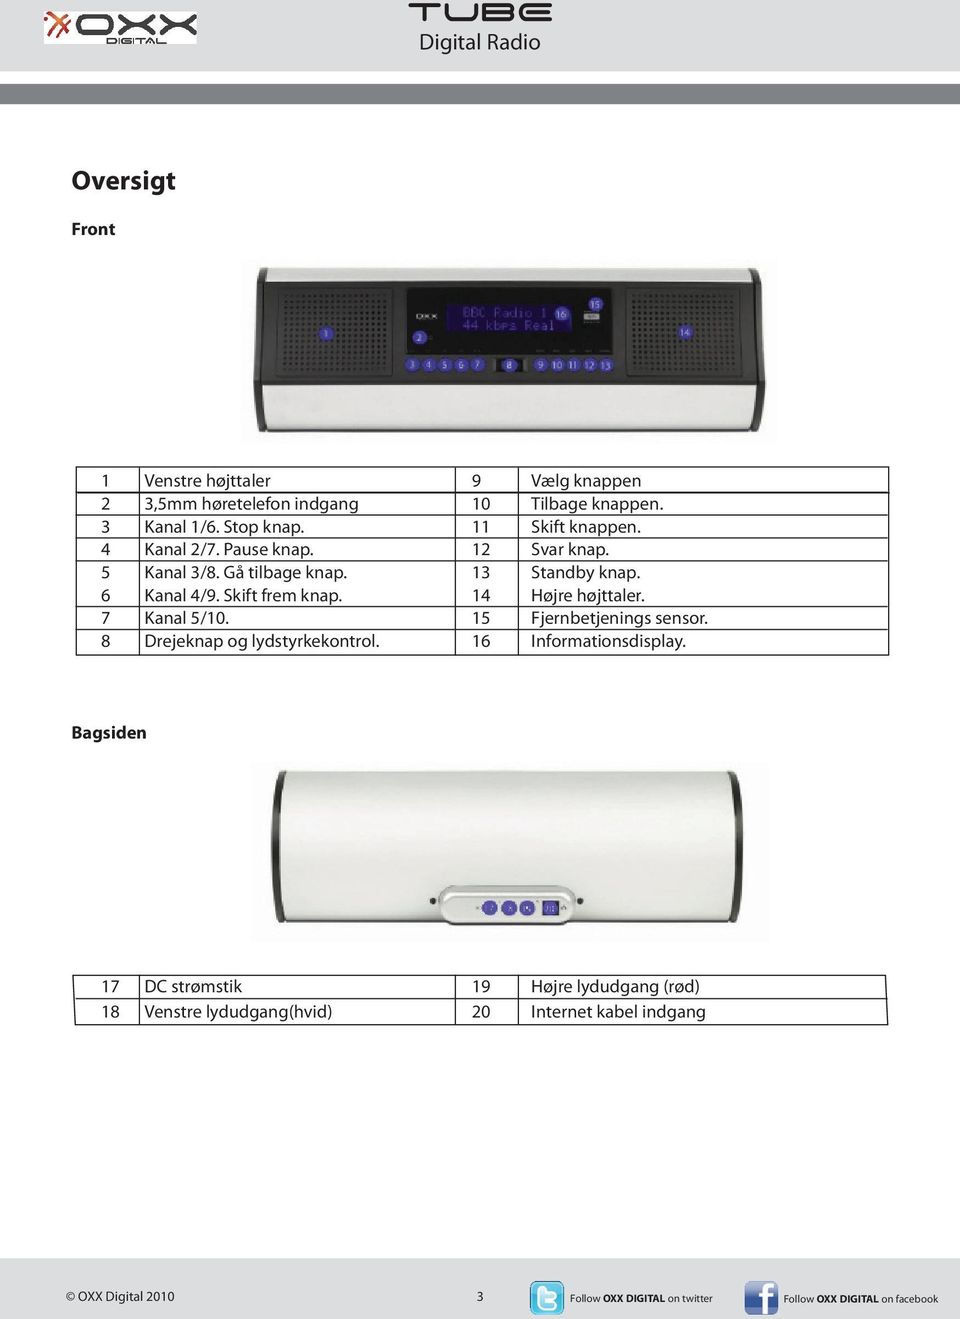 7 Kanal 5/10. 15 Fjernbetjenings sensor. 8 Drejeknap og lydstyrkekontrol. 16 Informationsdisplay.